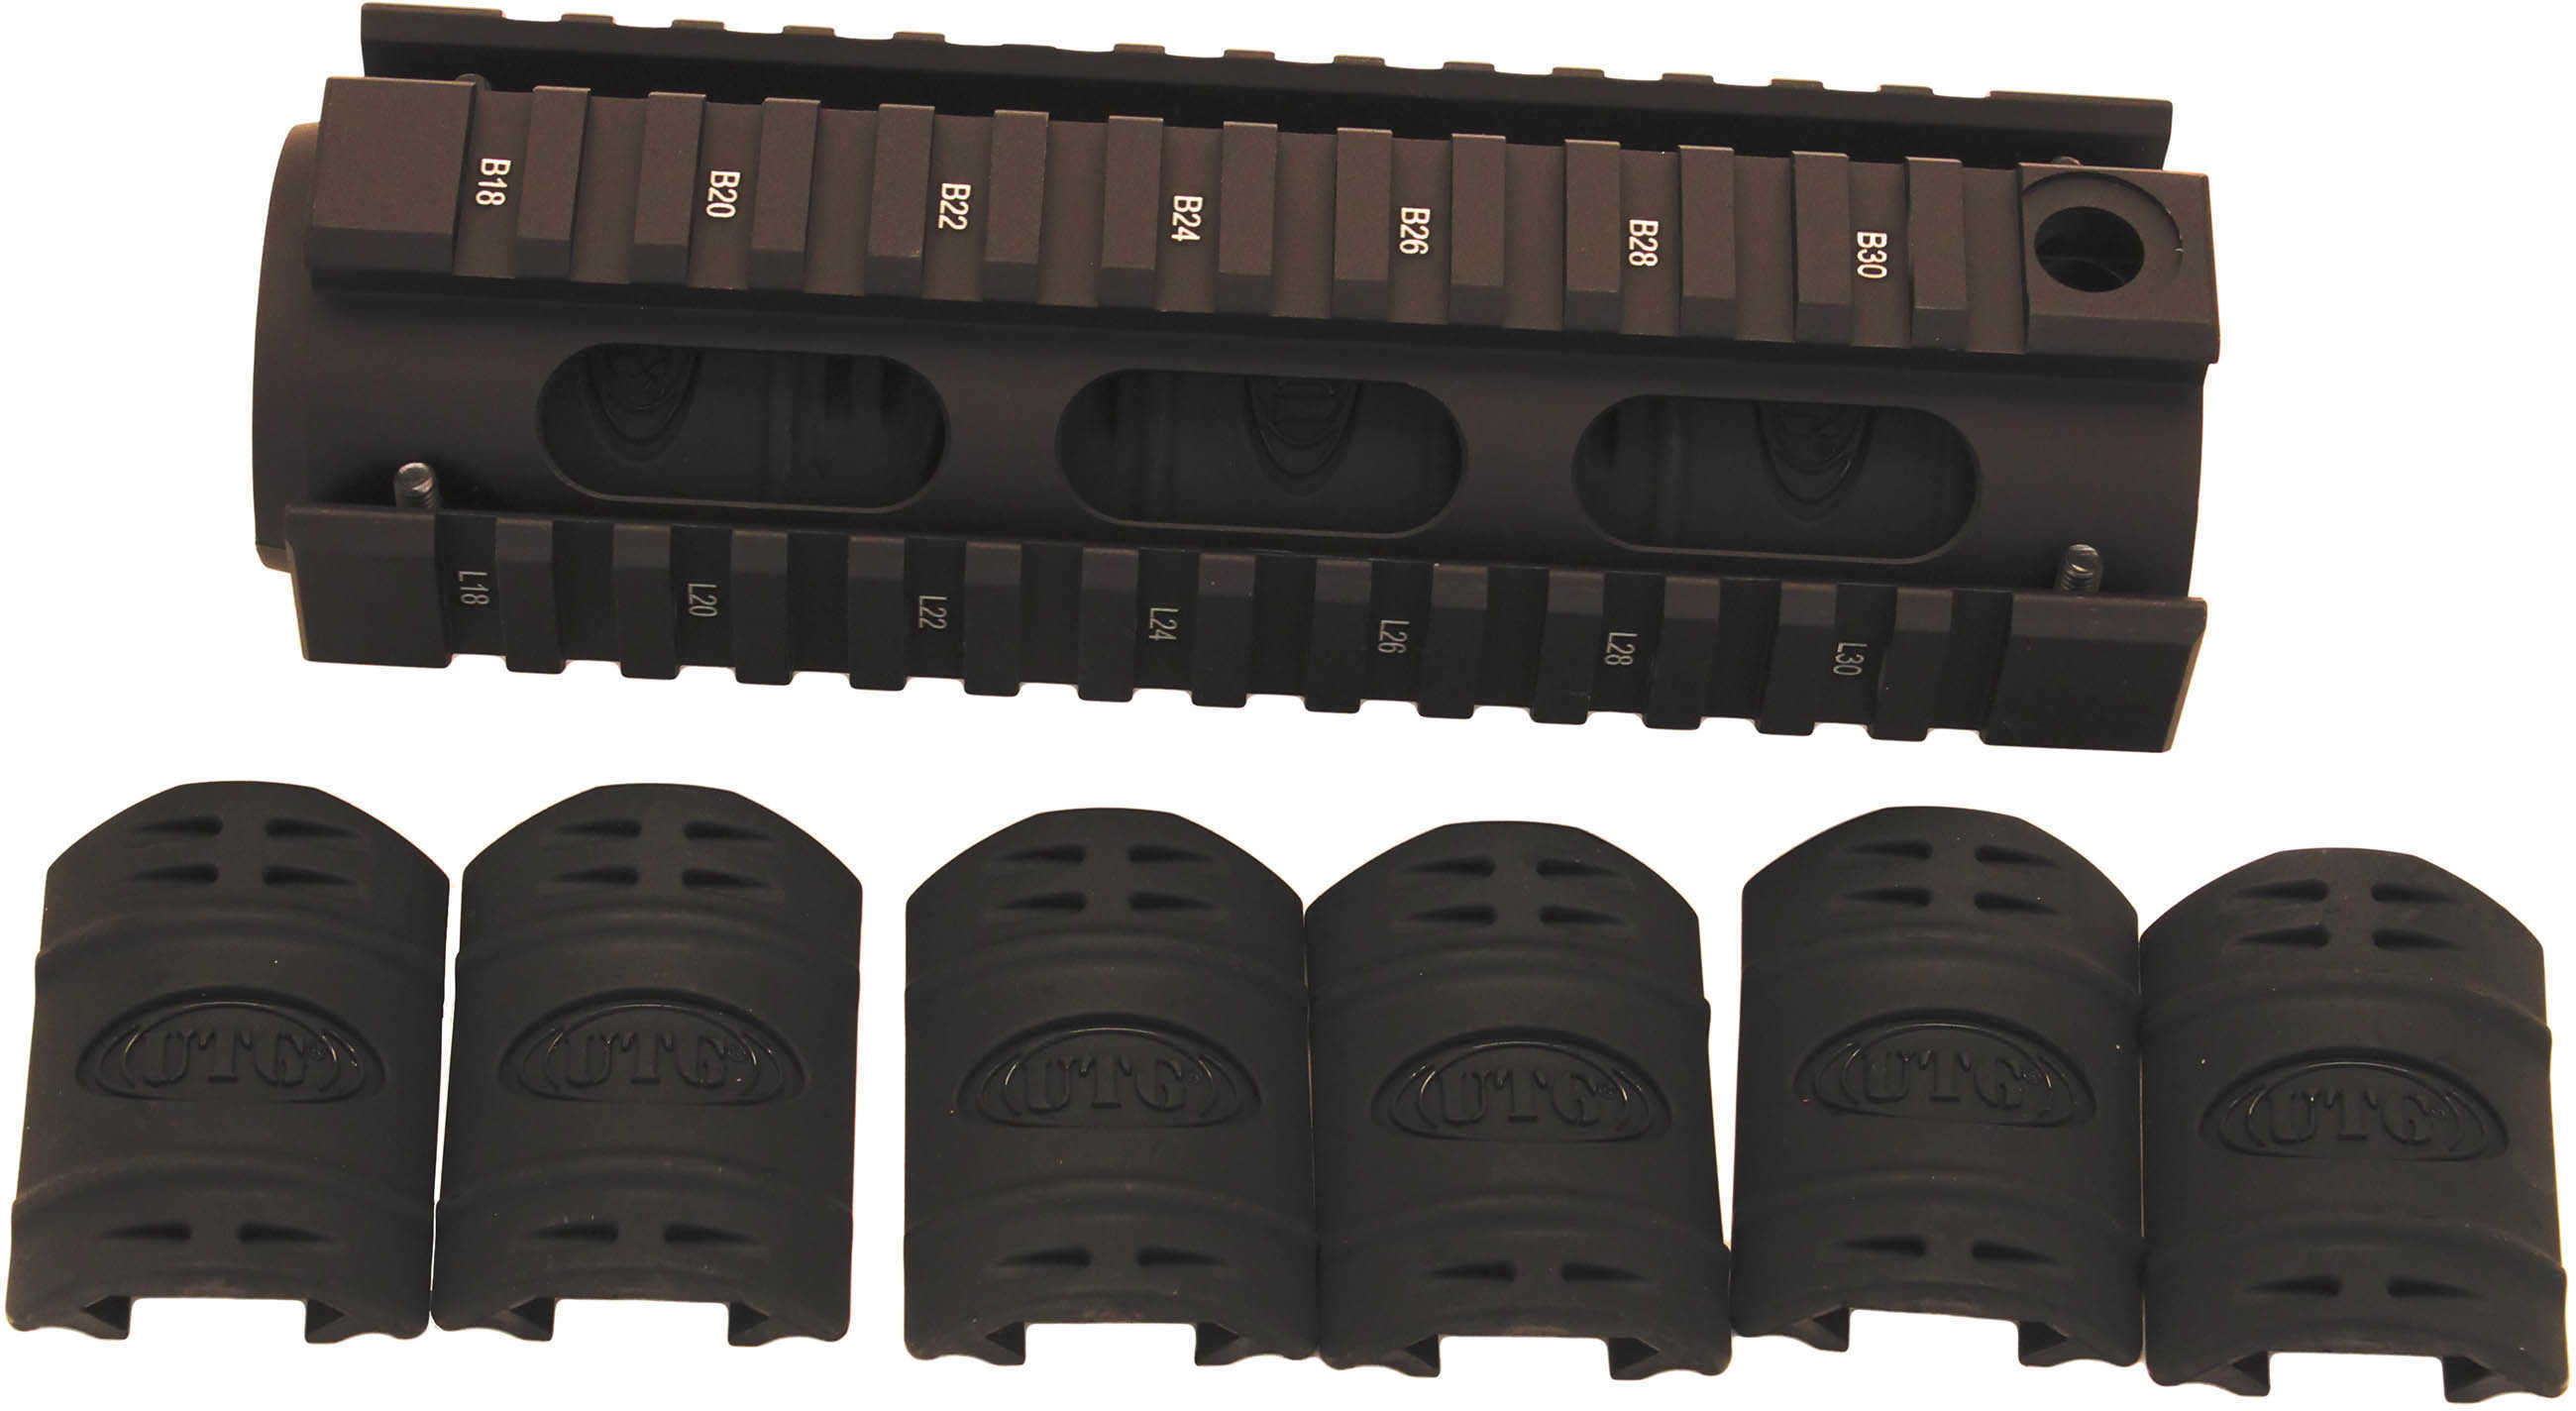 Leapers-UTG AR15 Carbine Length Drop-in Quad Rail, Black MD: MTU001